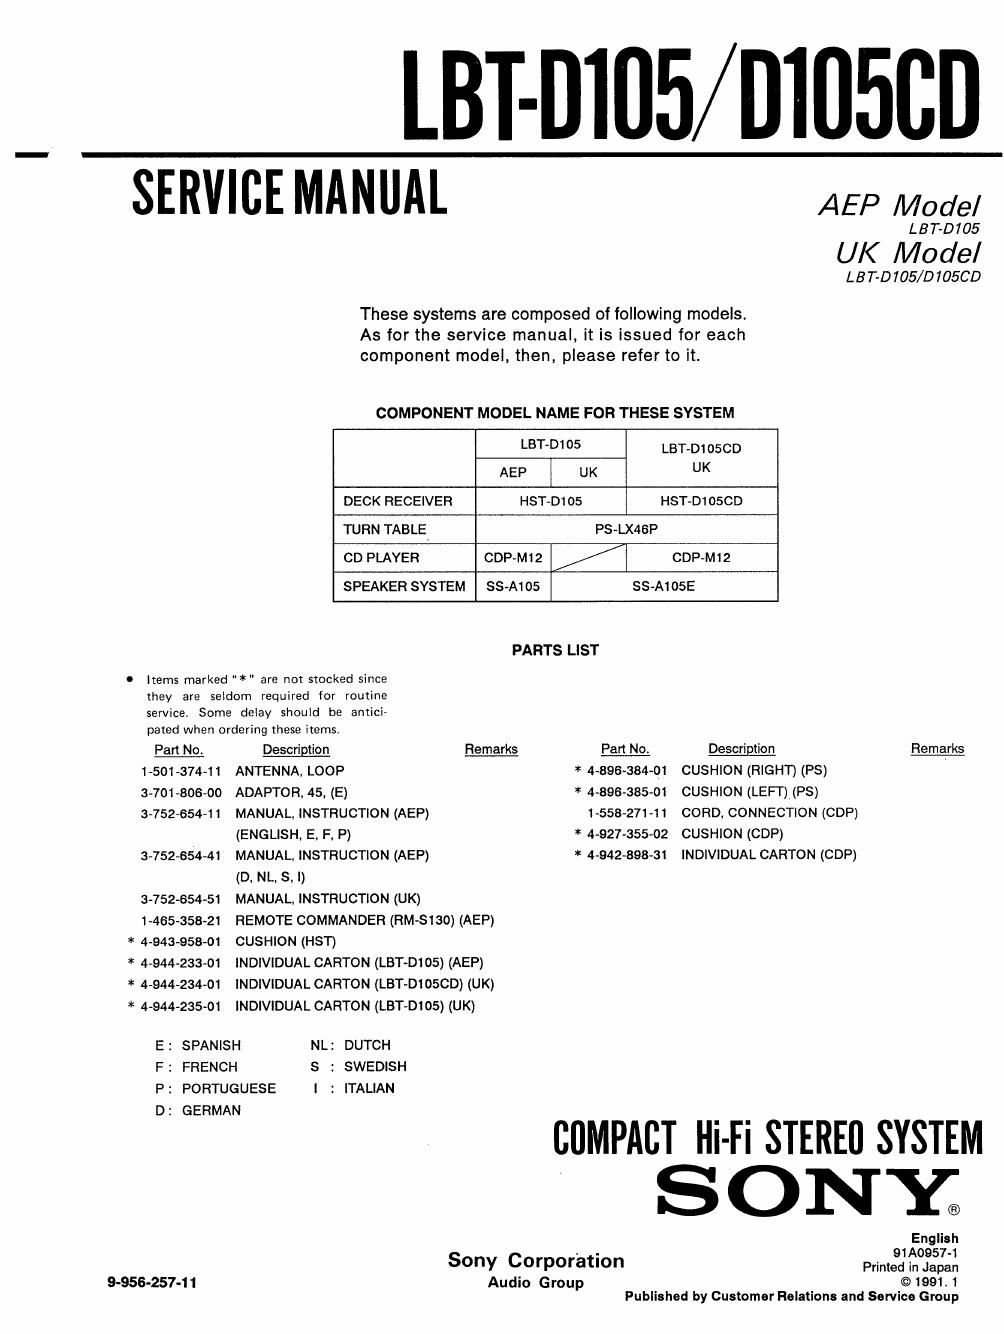 sony lbt d 105 cd service manual